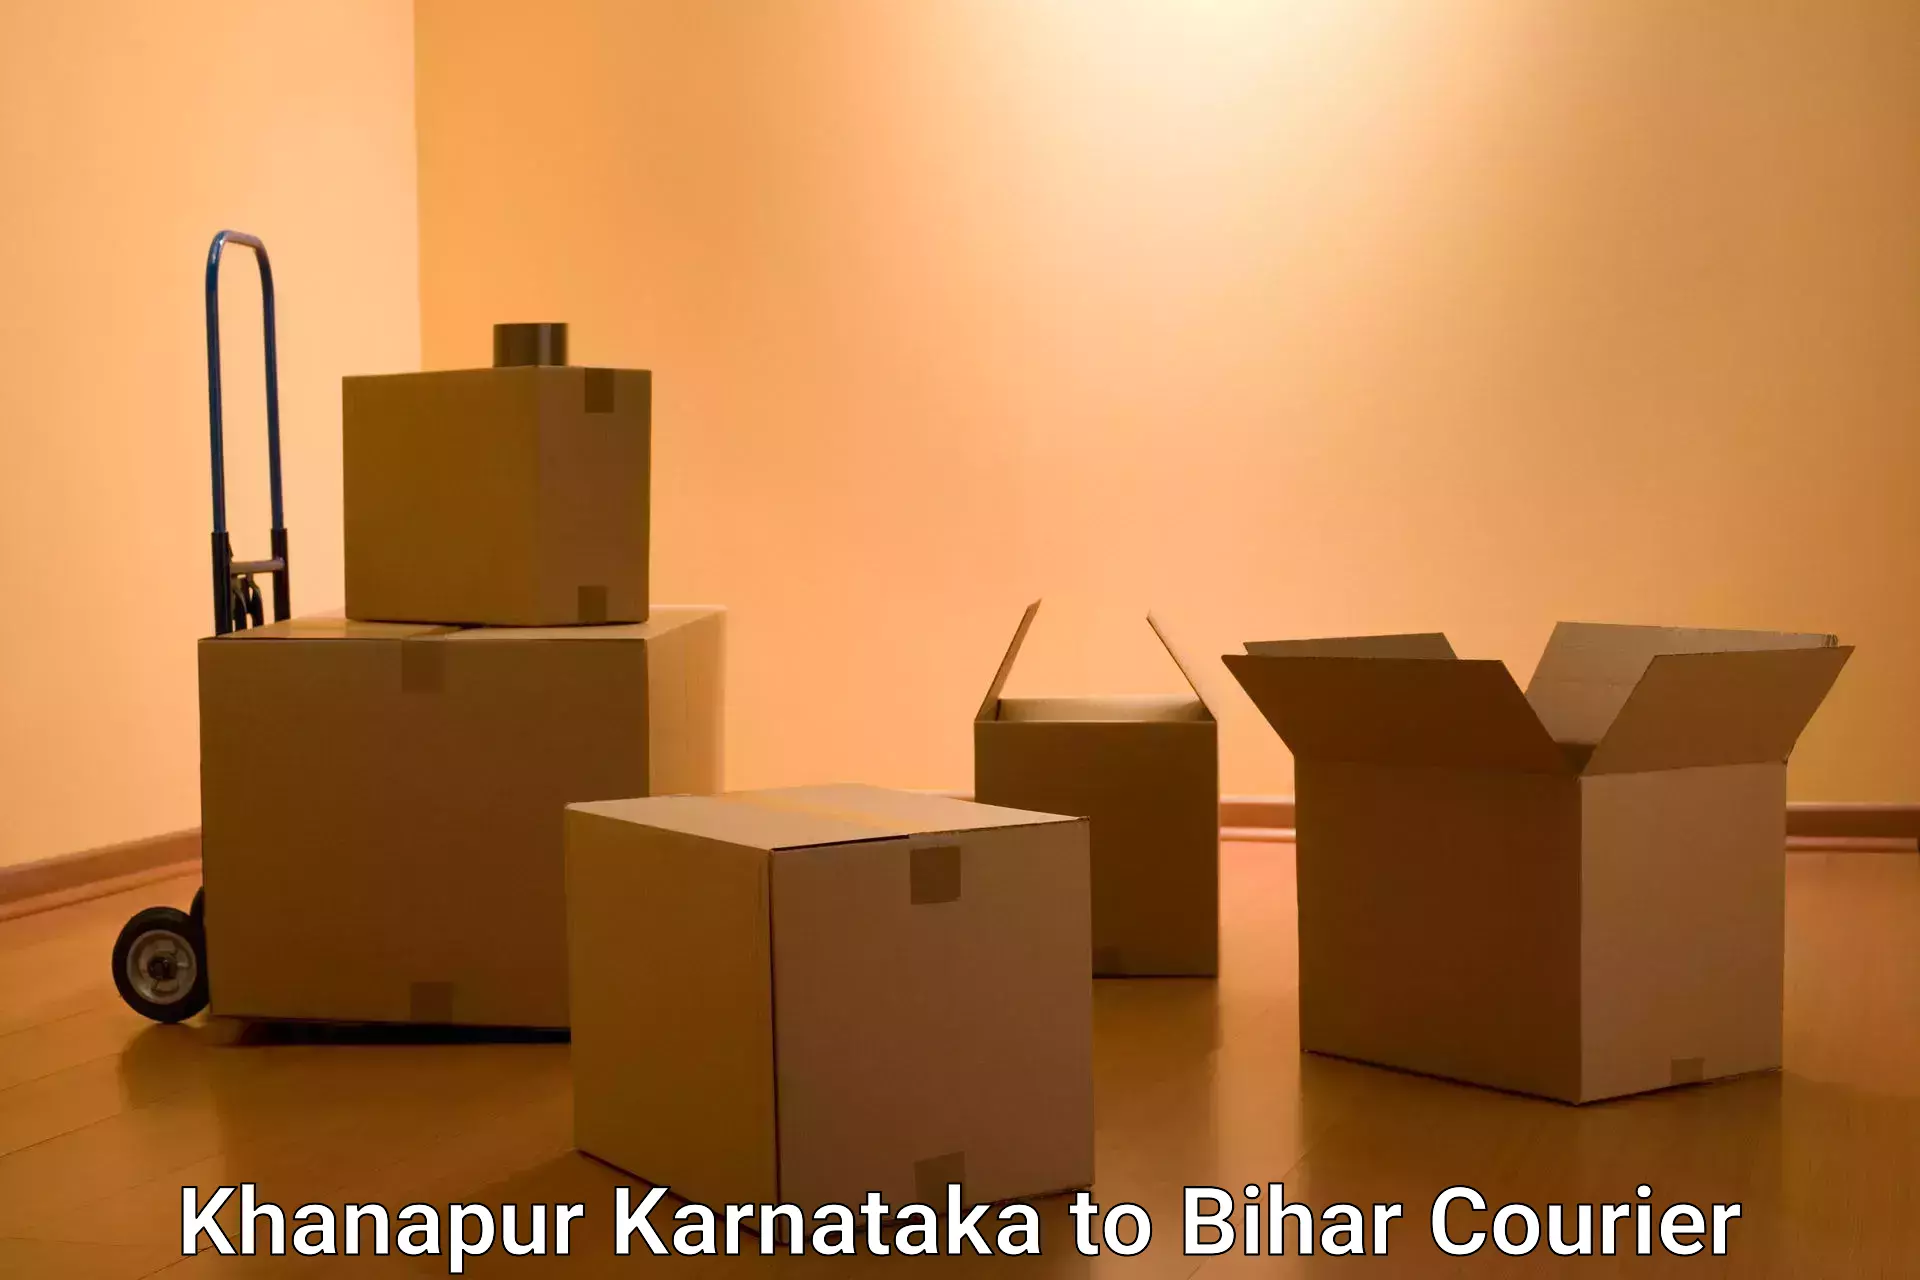 Flexible delivery schedules Khanapur Karnataka to Sheonar